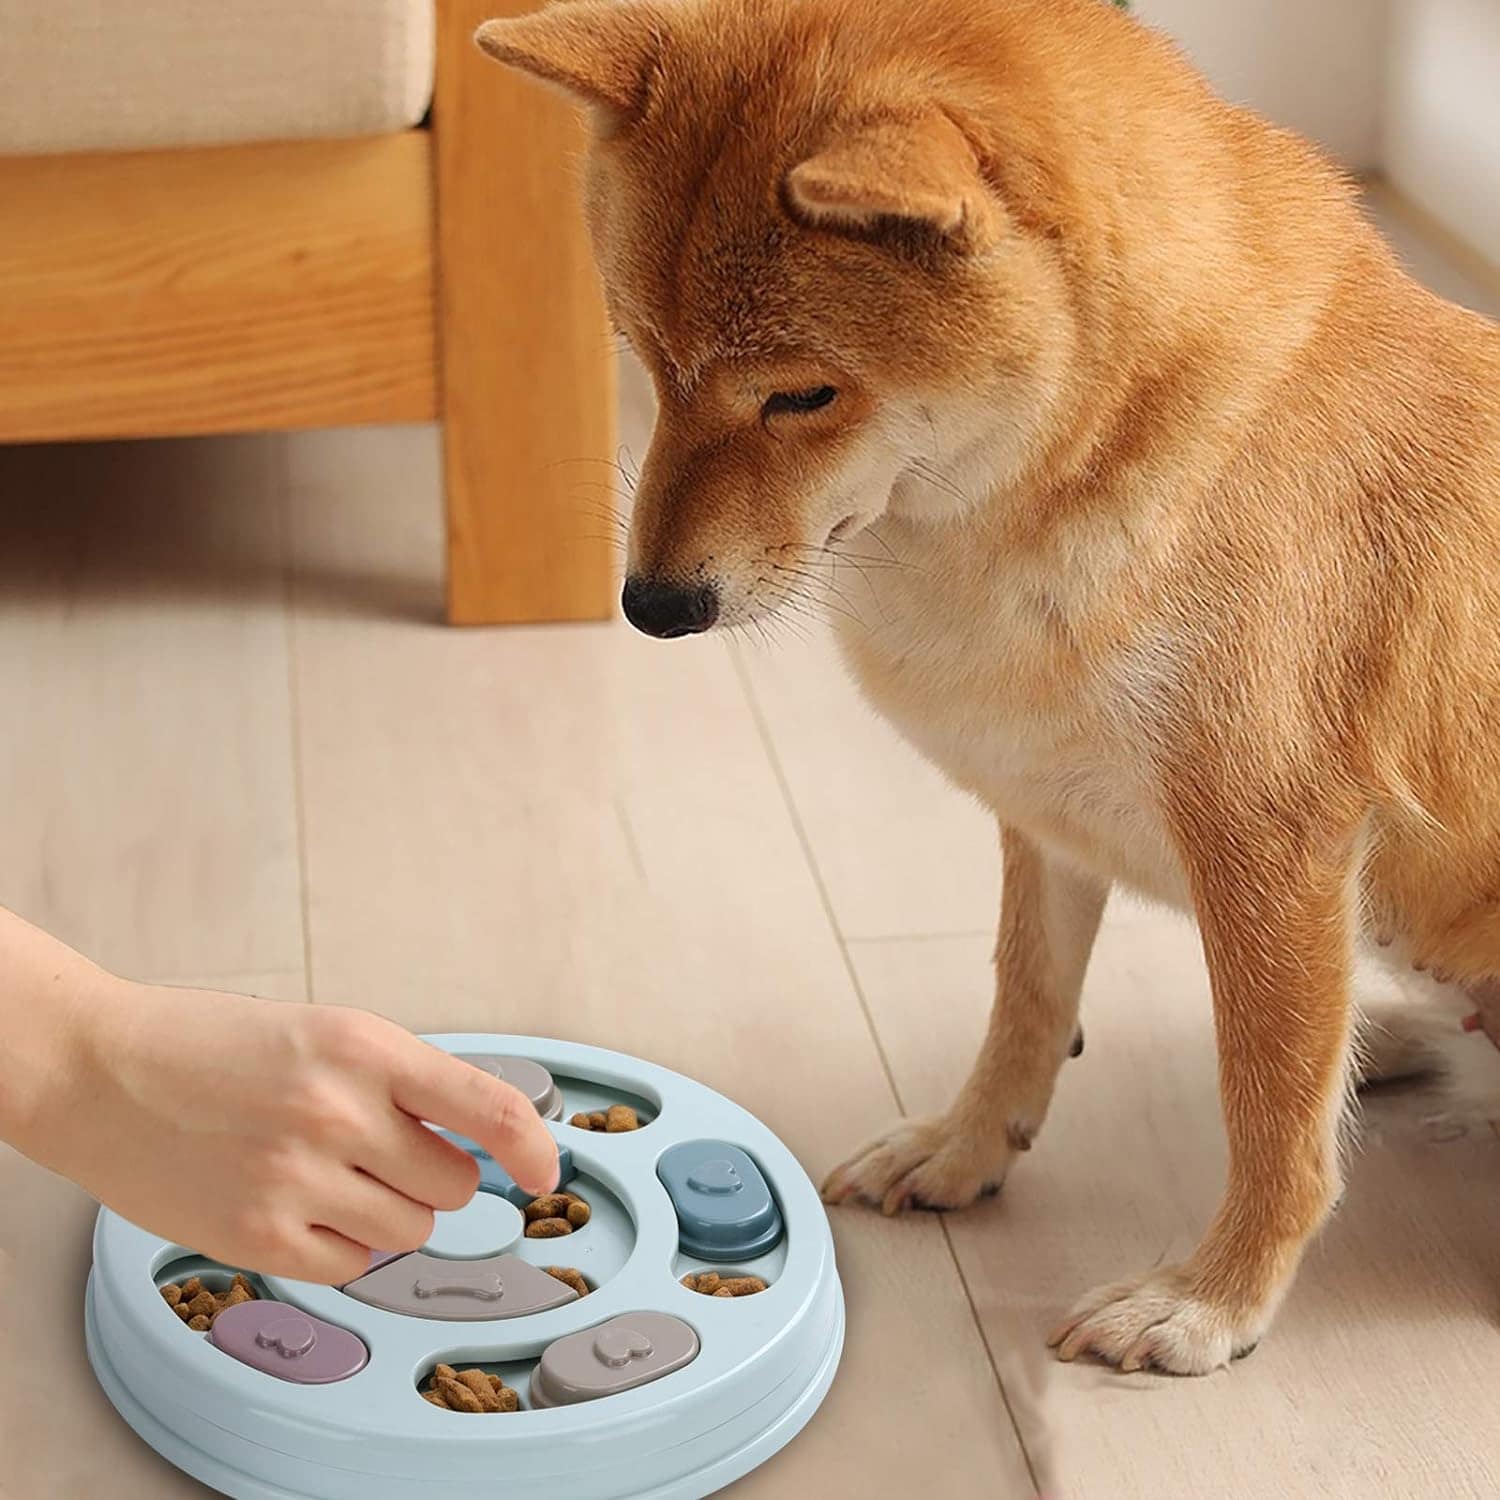 Toys - Food Stuffing — Pawsitive Pet Behavior, llc